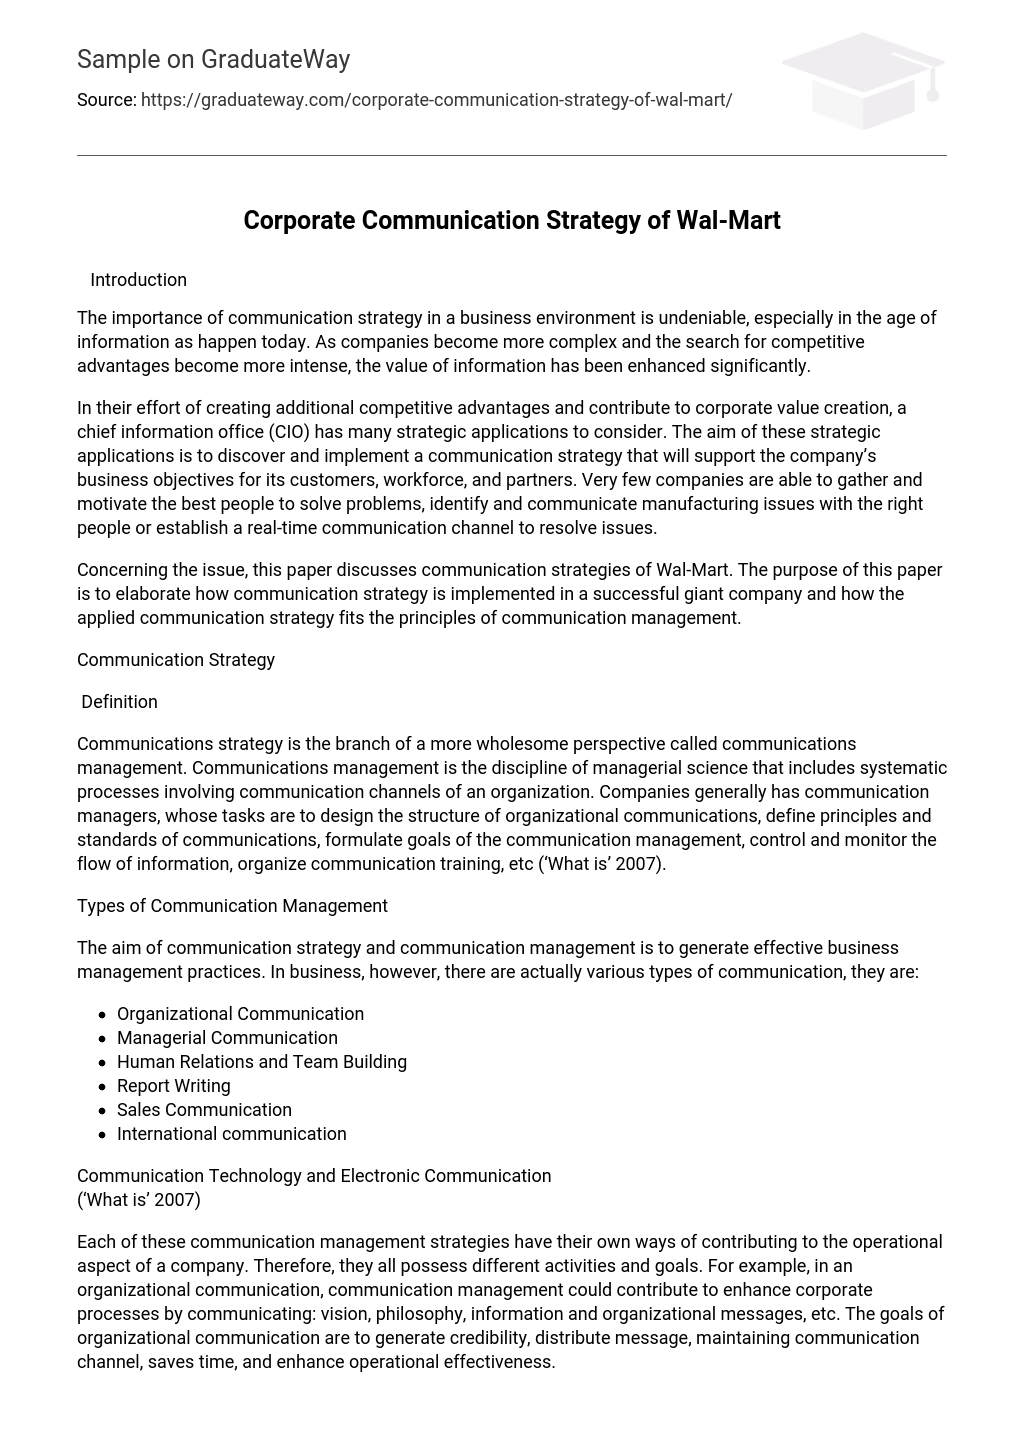 Corporate Communication Strategy of Wal-Mart